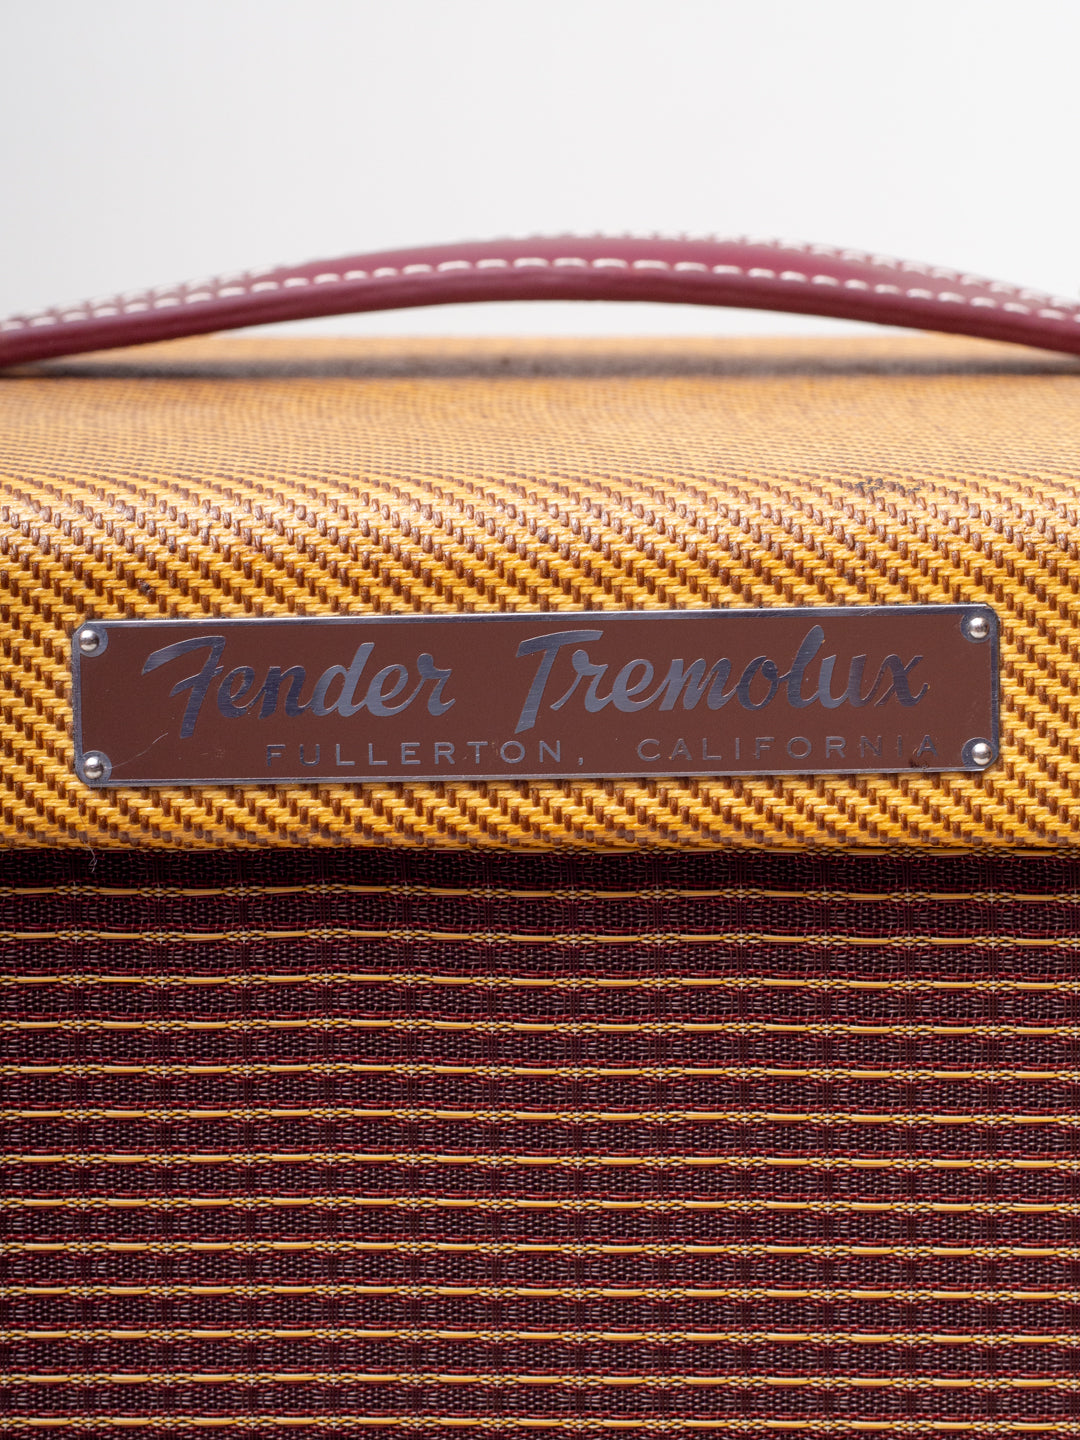 1960 Fender 5E9-A Tremolux Tweed Amplifier